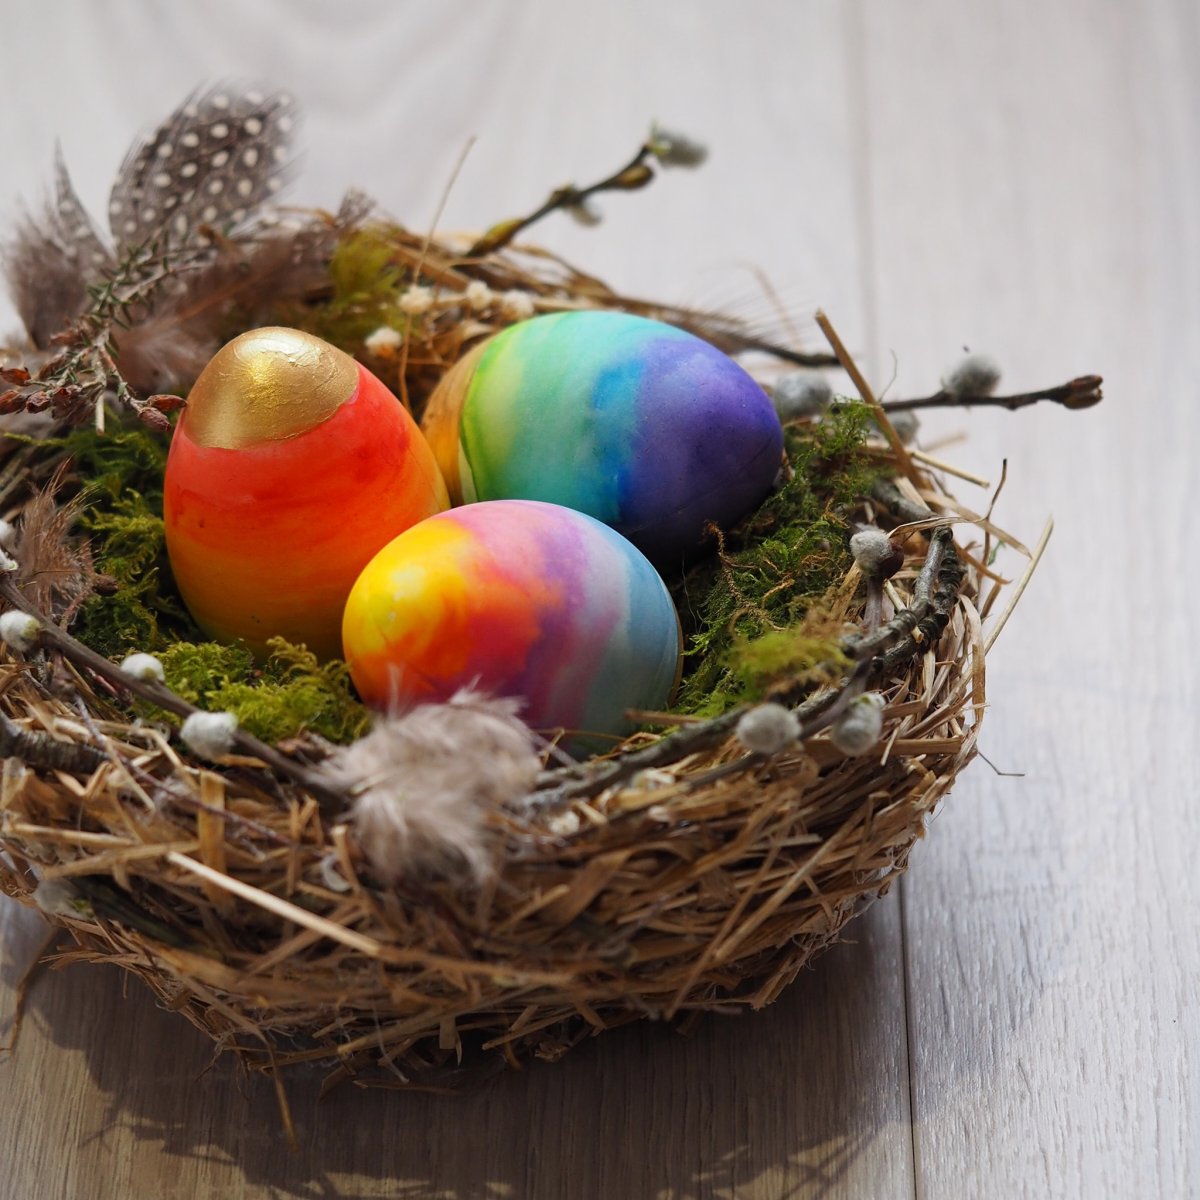 Celebrating Easter through Creative Ritual